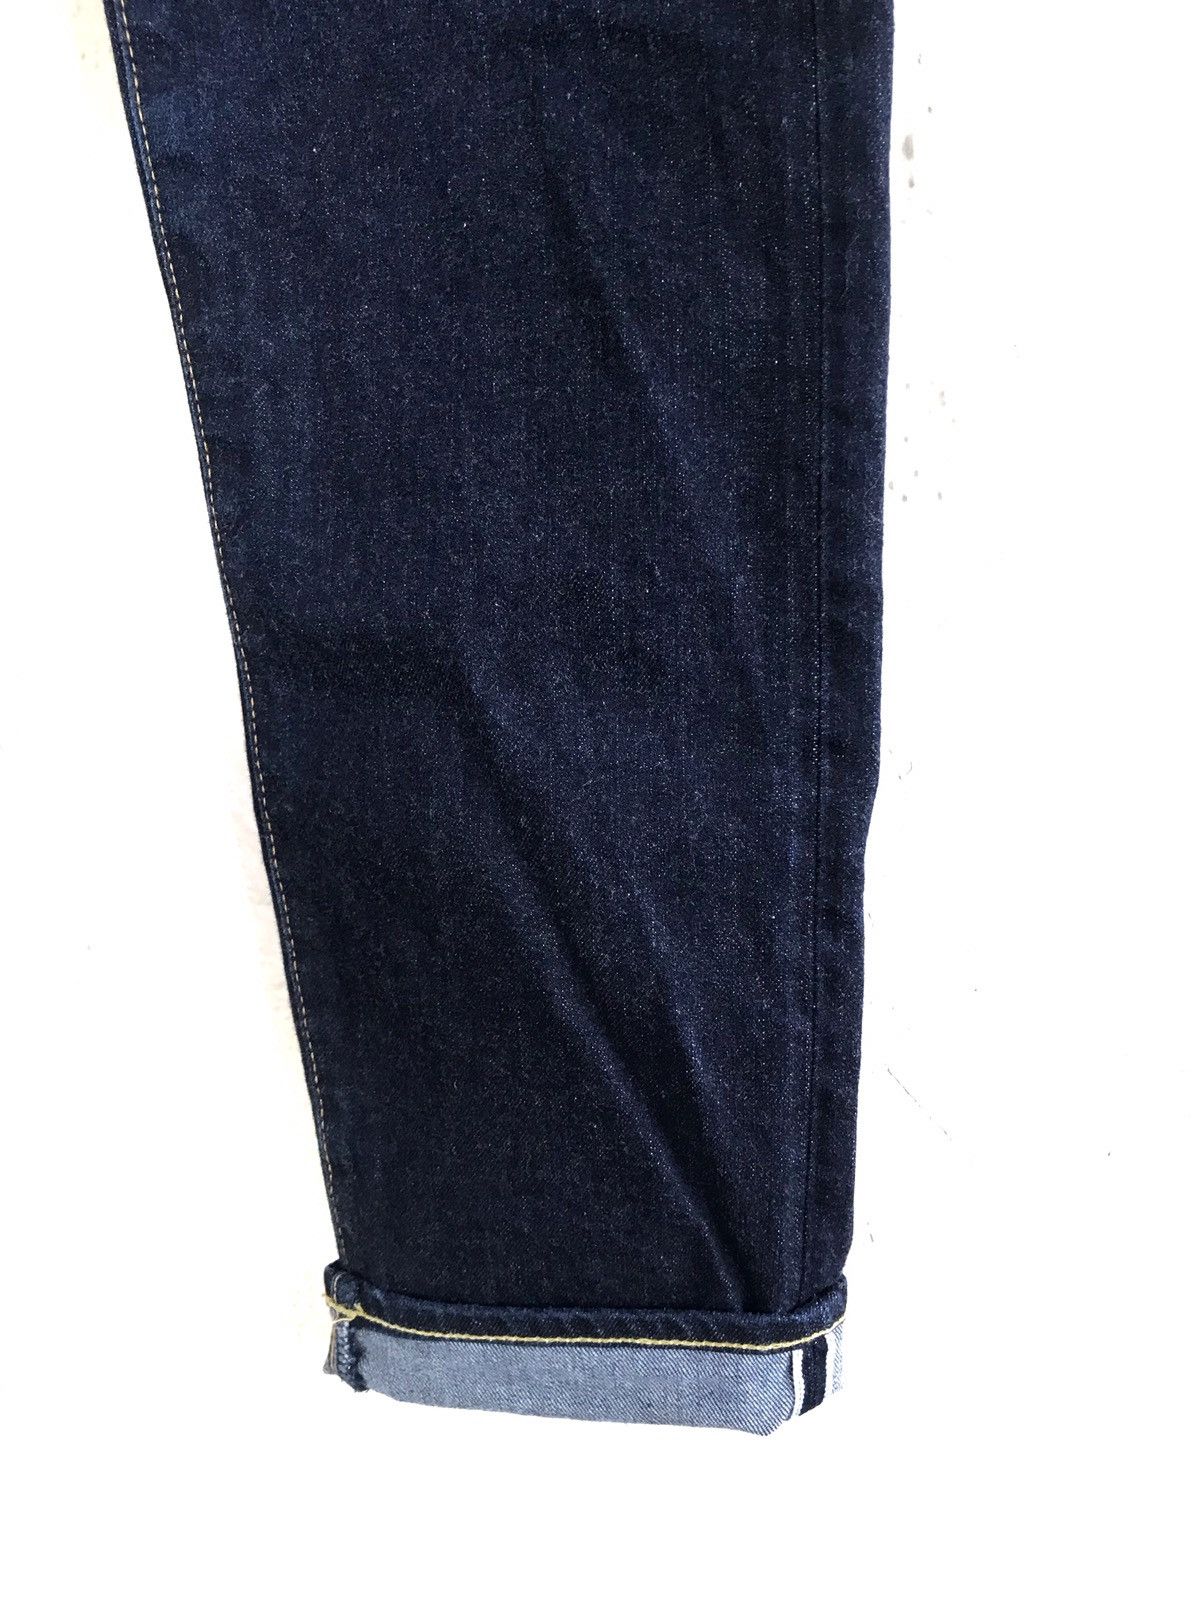 VANQUISH Japan Selvedge Skinny Jeans - 10